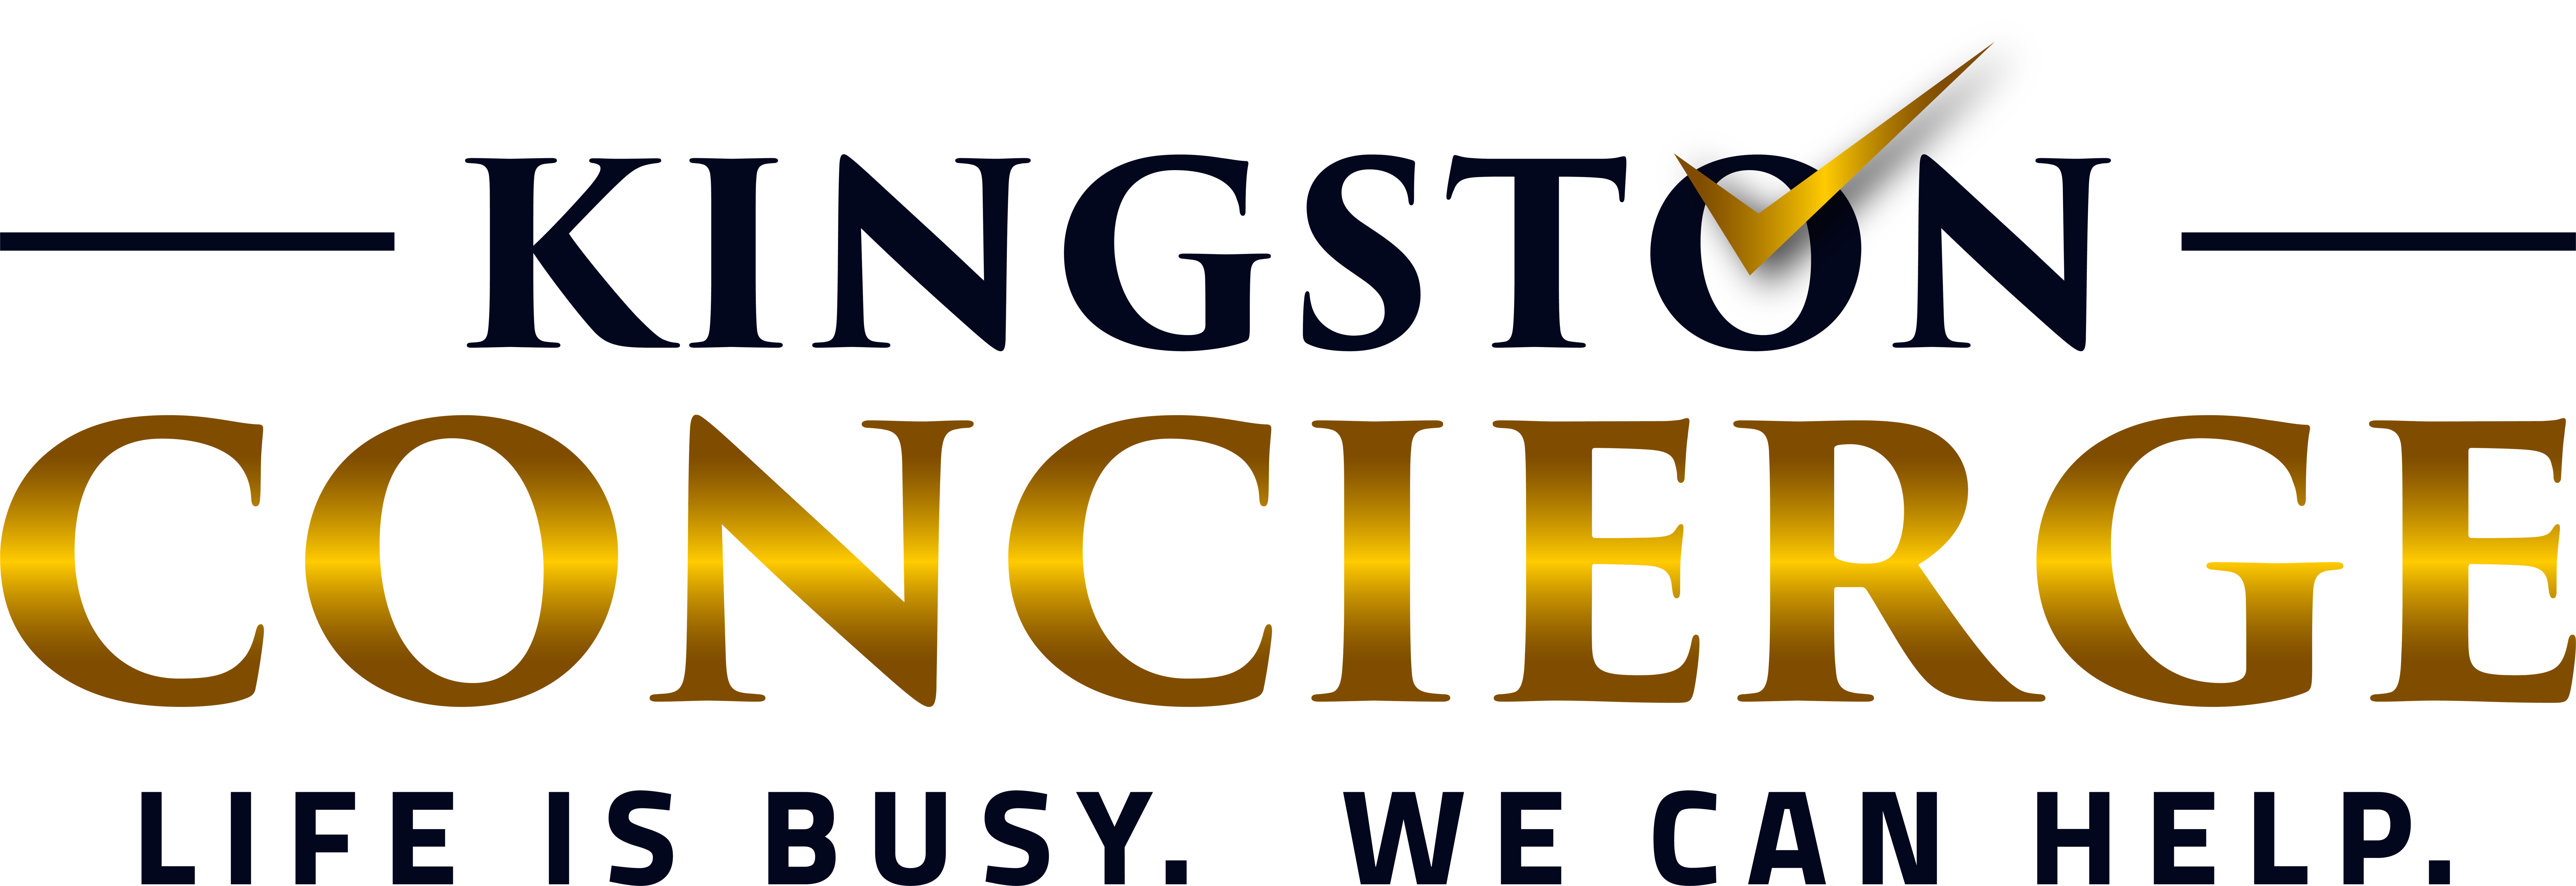 Kingston Concierge